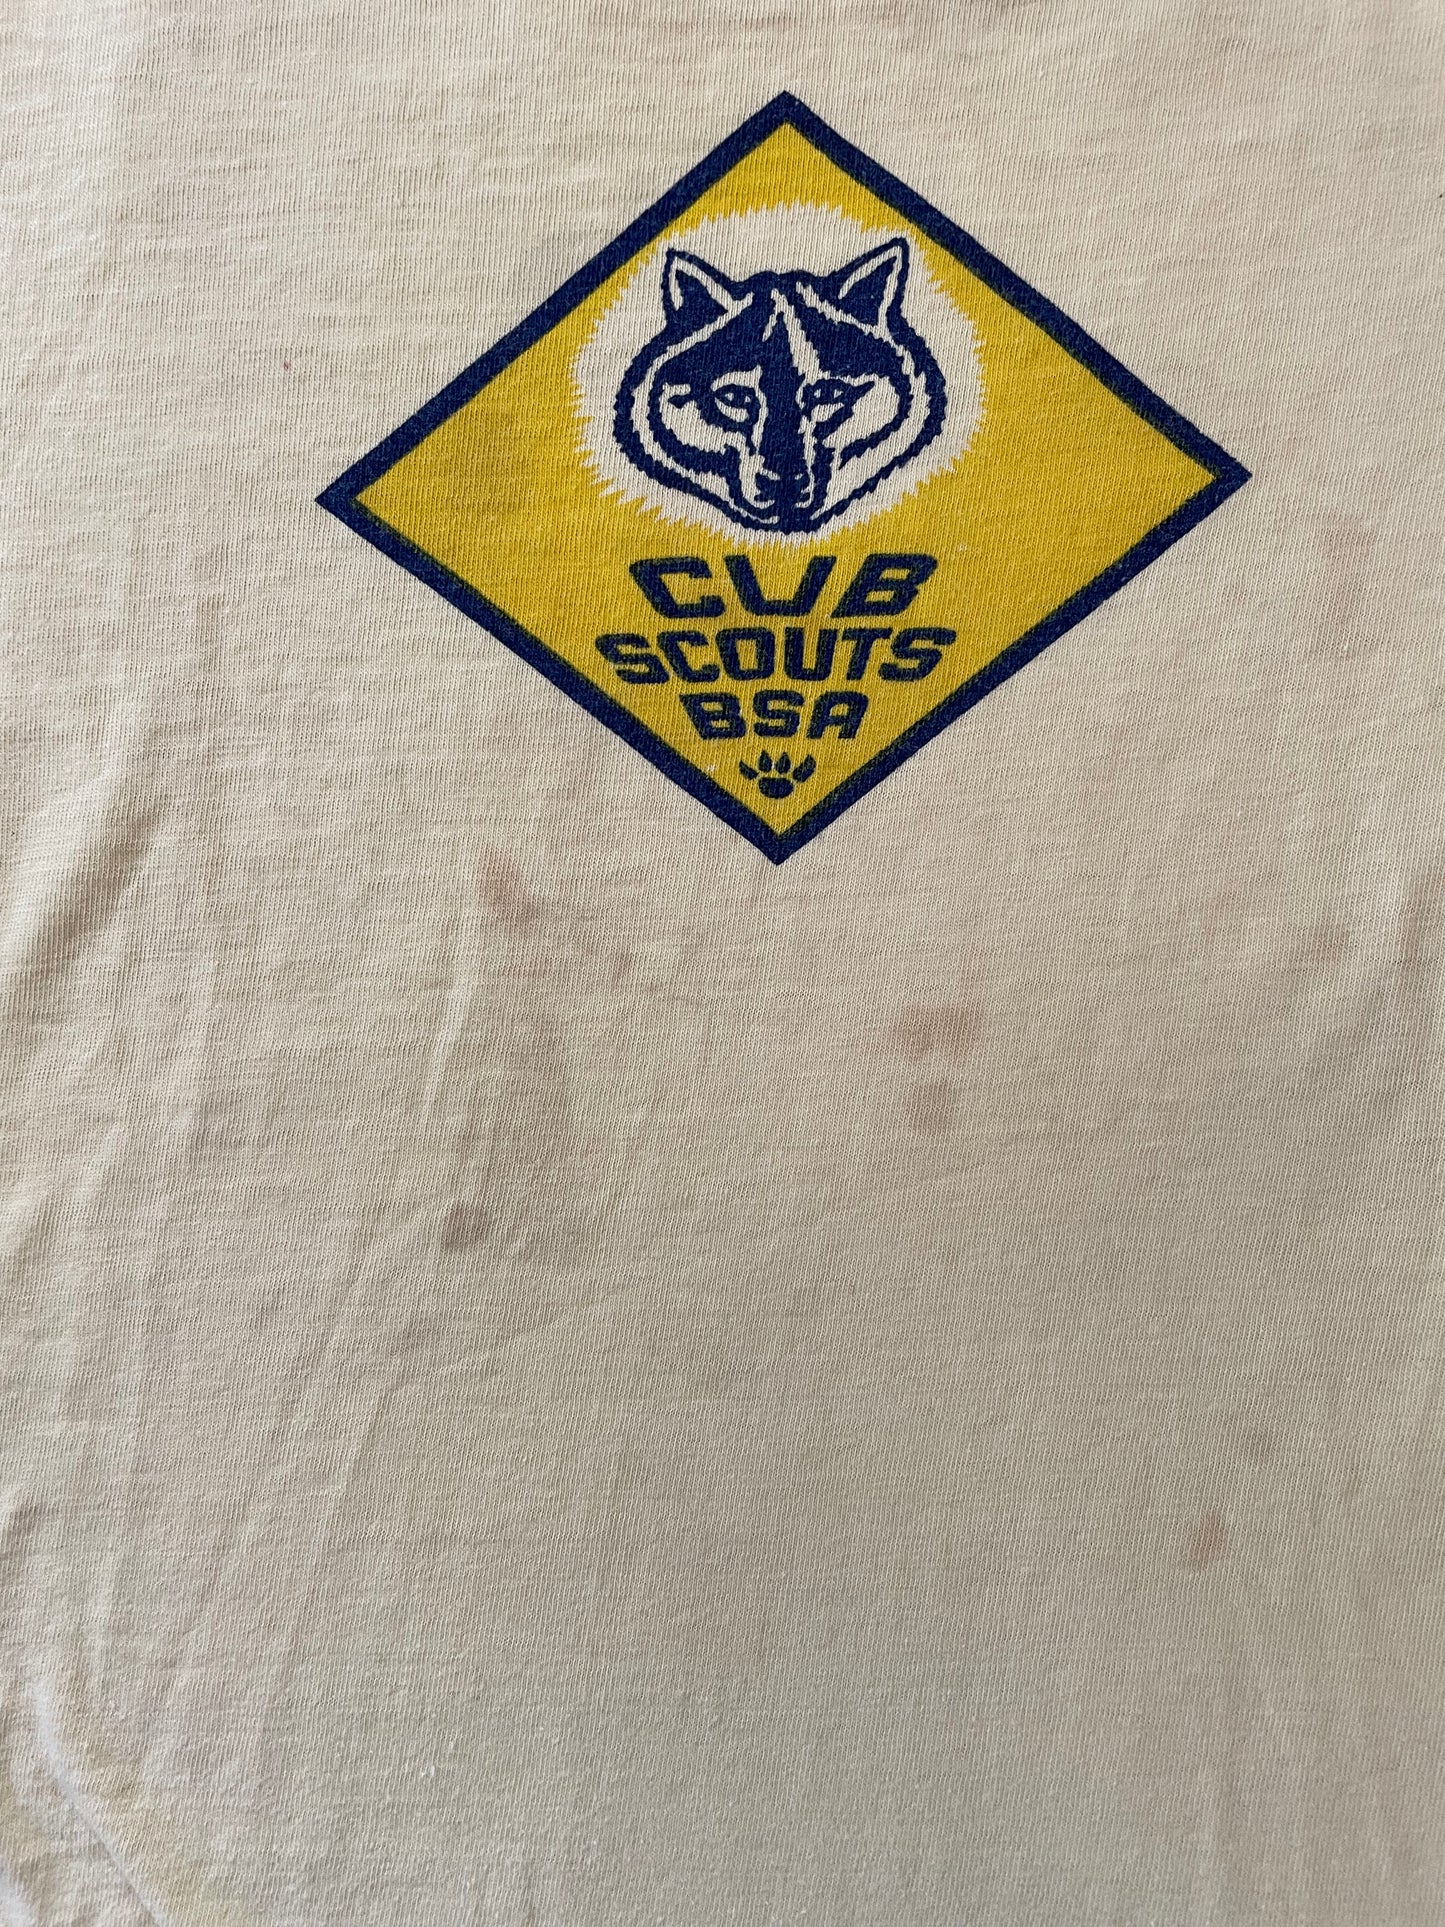 70s Cub Scouts BSA Tee